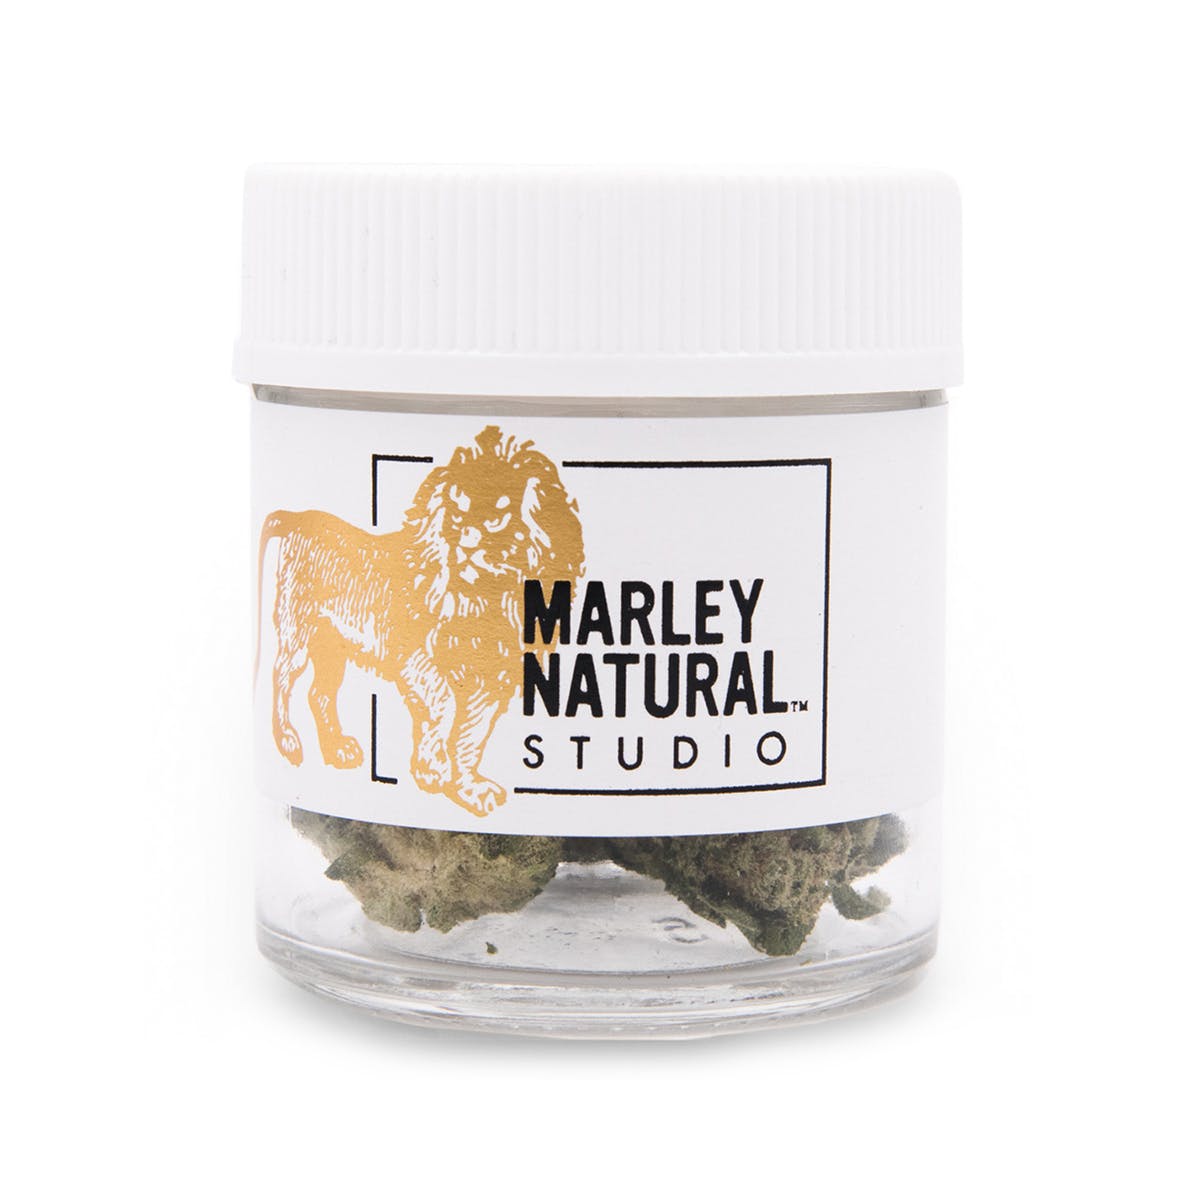 marijuana-dispensaries-phog-center-in-pacifica-marley-naturala-c2-84c-studio-the-one